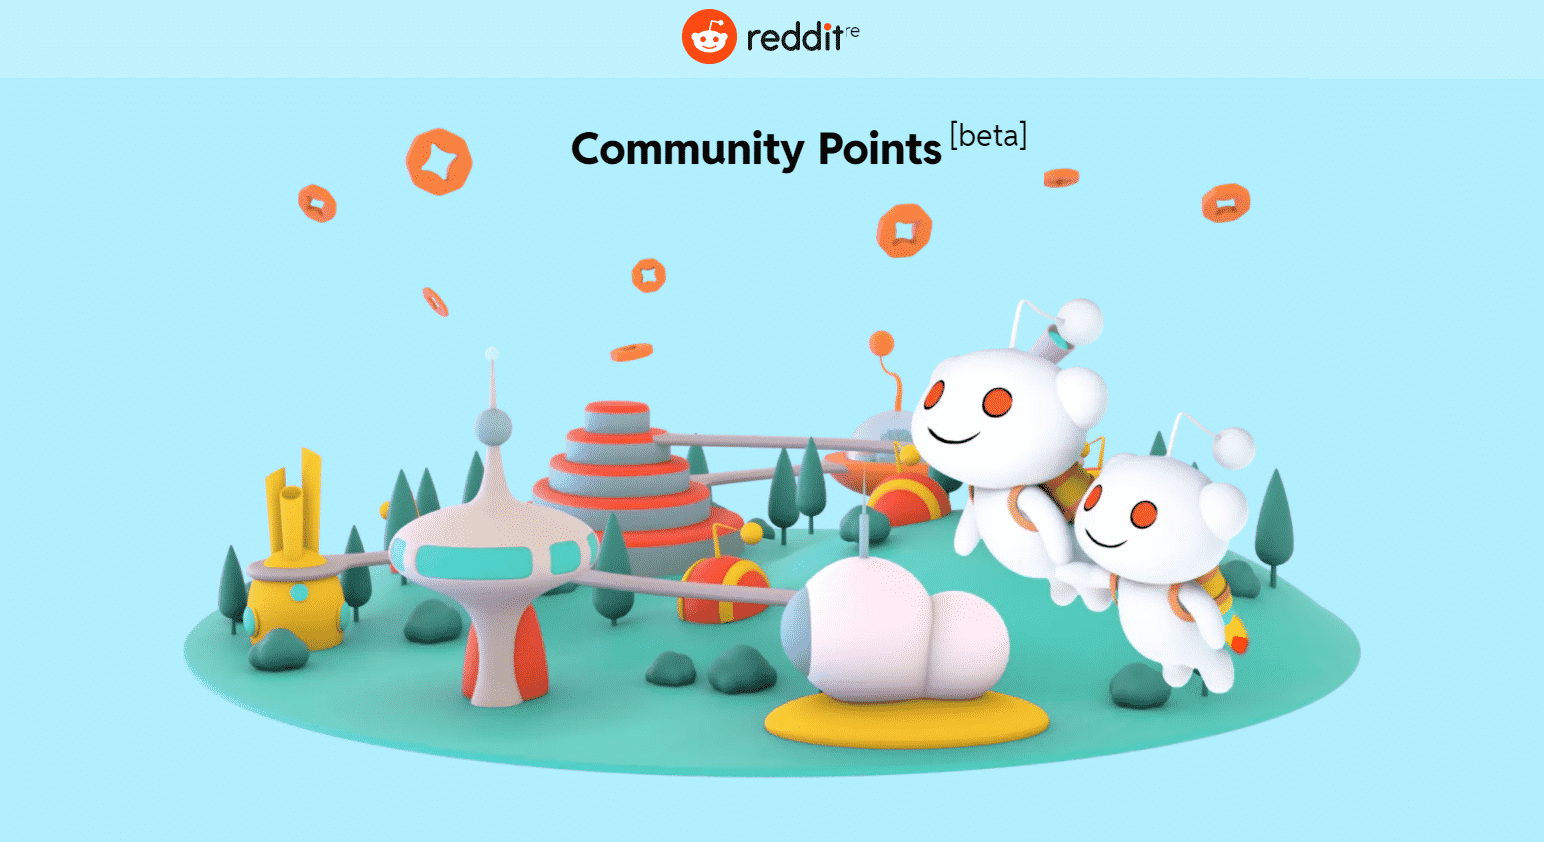 Reddit introduces Community Points beta